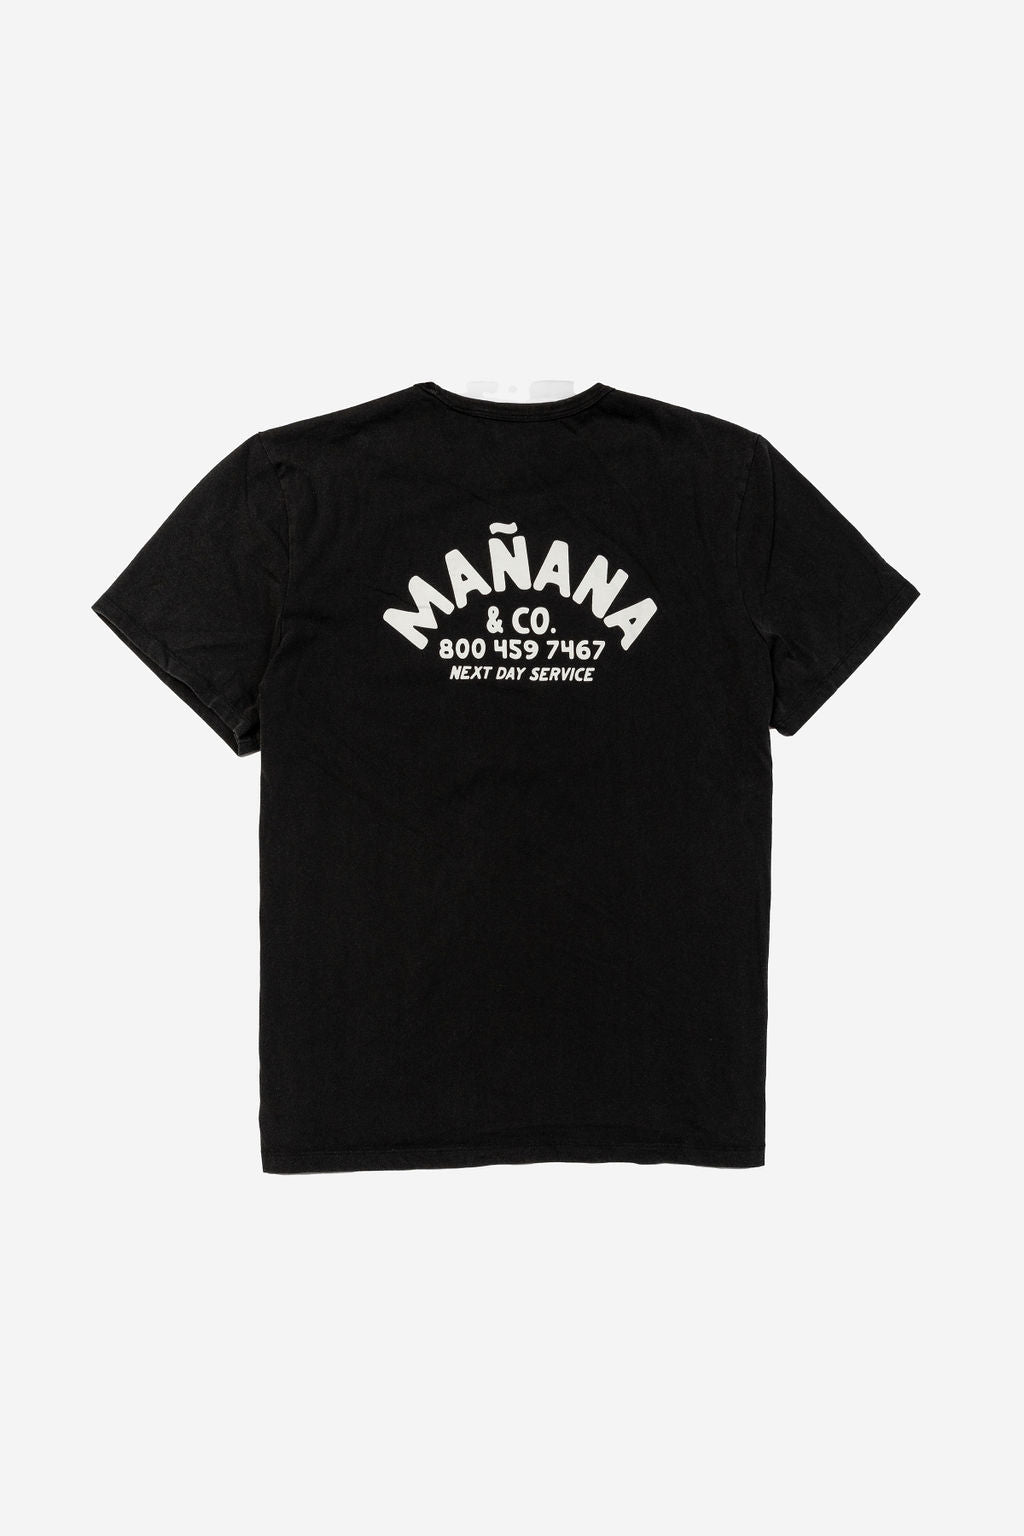 Washed Black Shop Tee Shirt having Manana branding